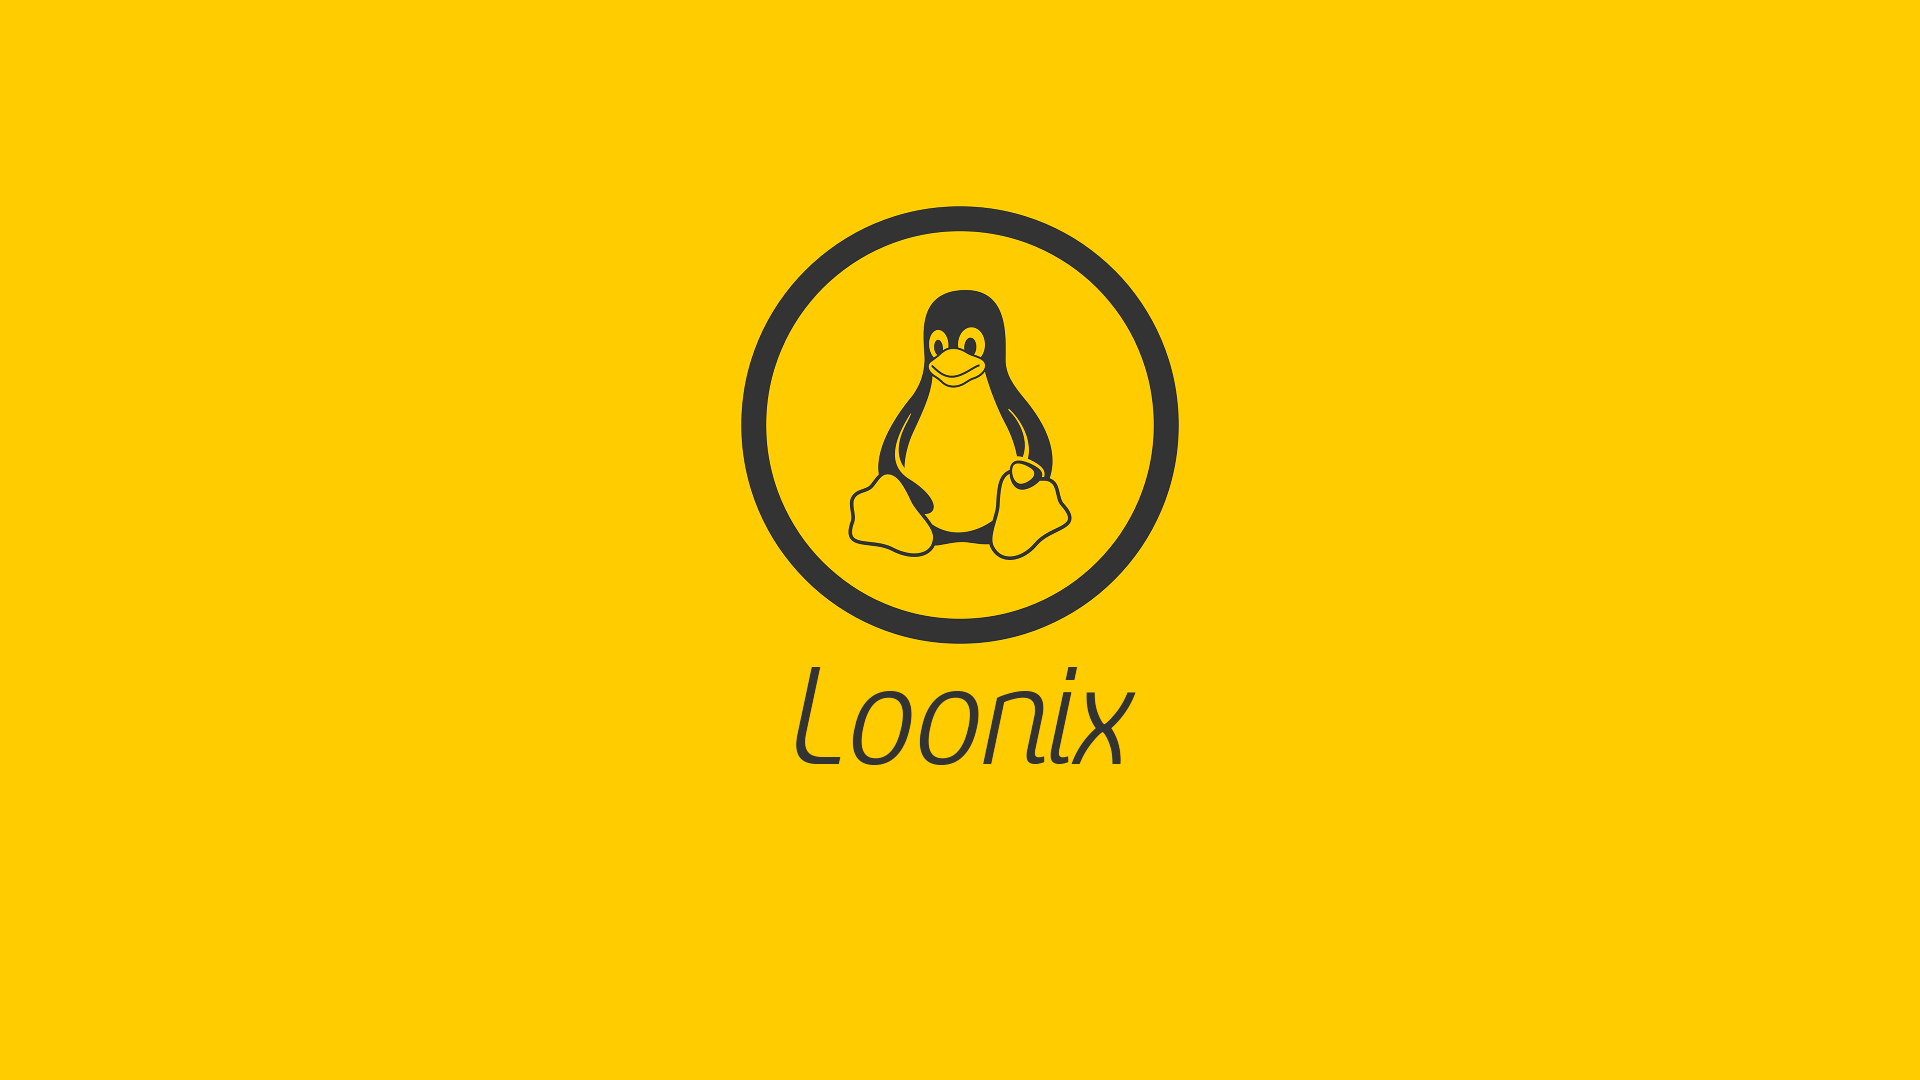 Linux Tux Yellow Background Penguins 1920x1080